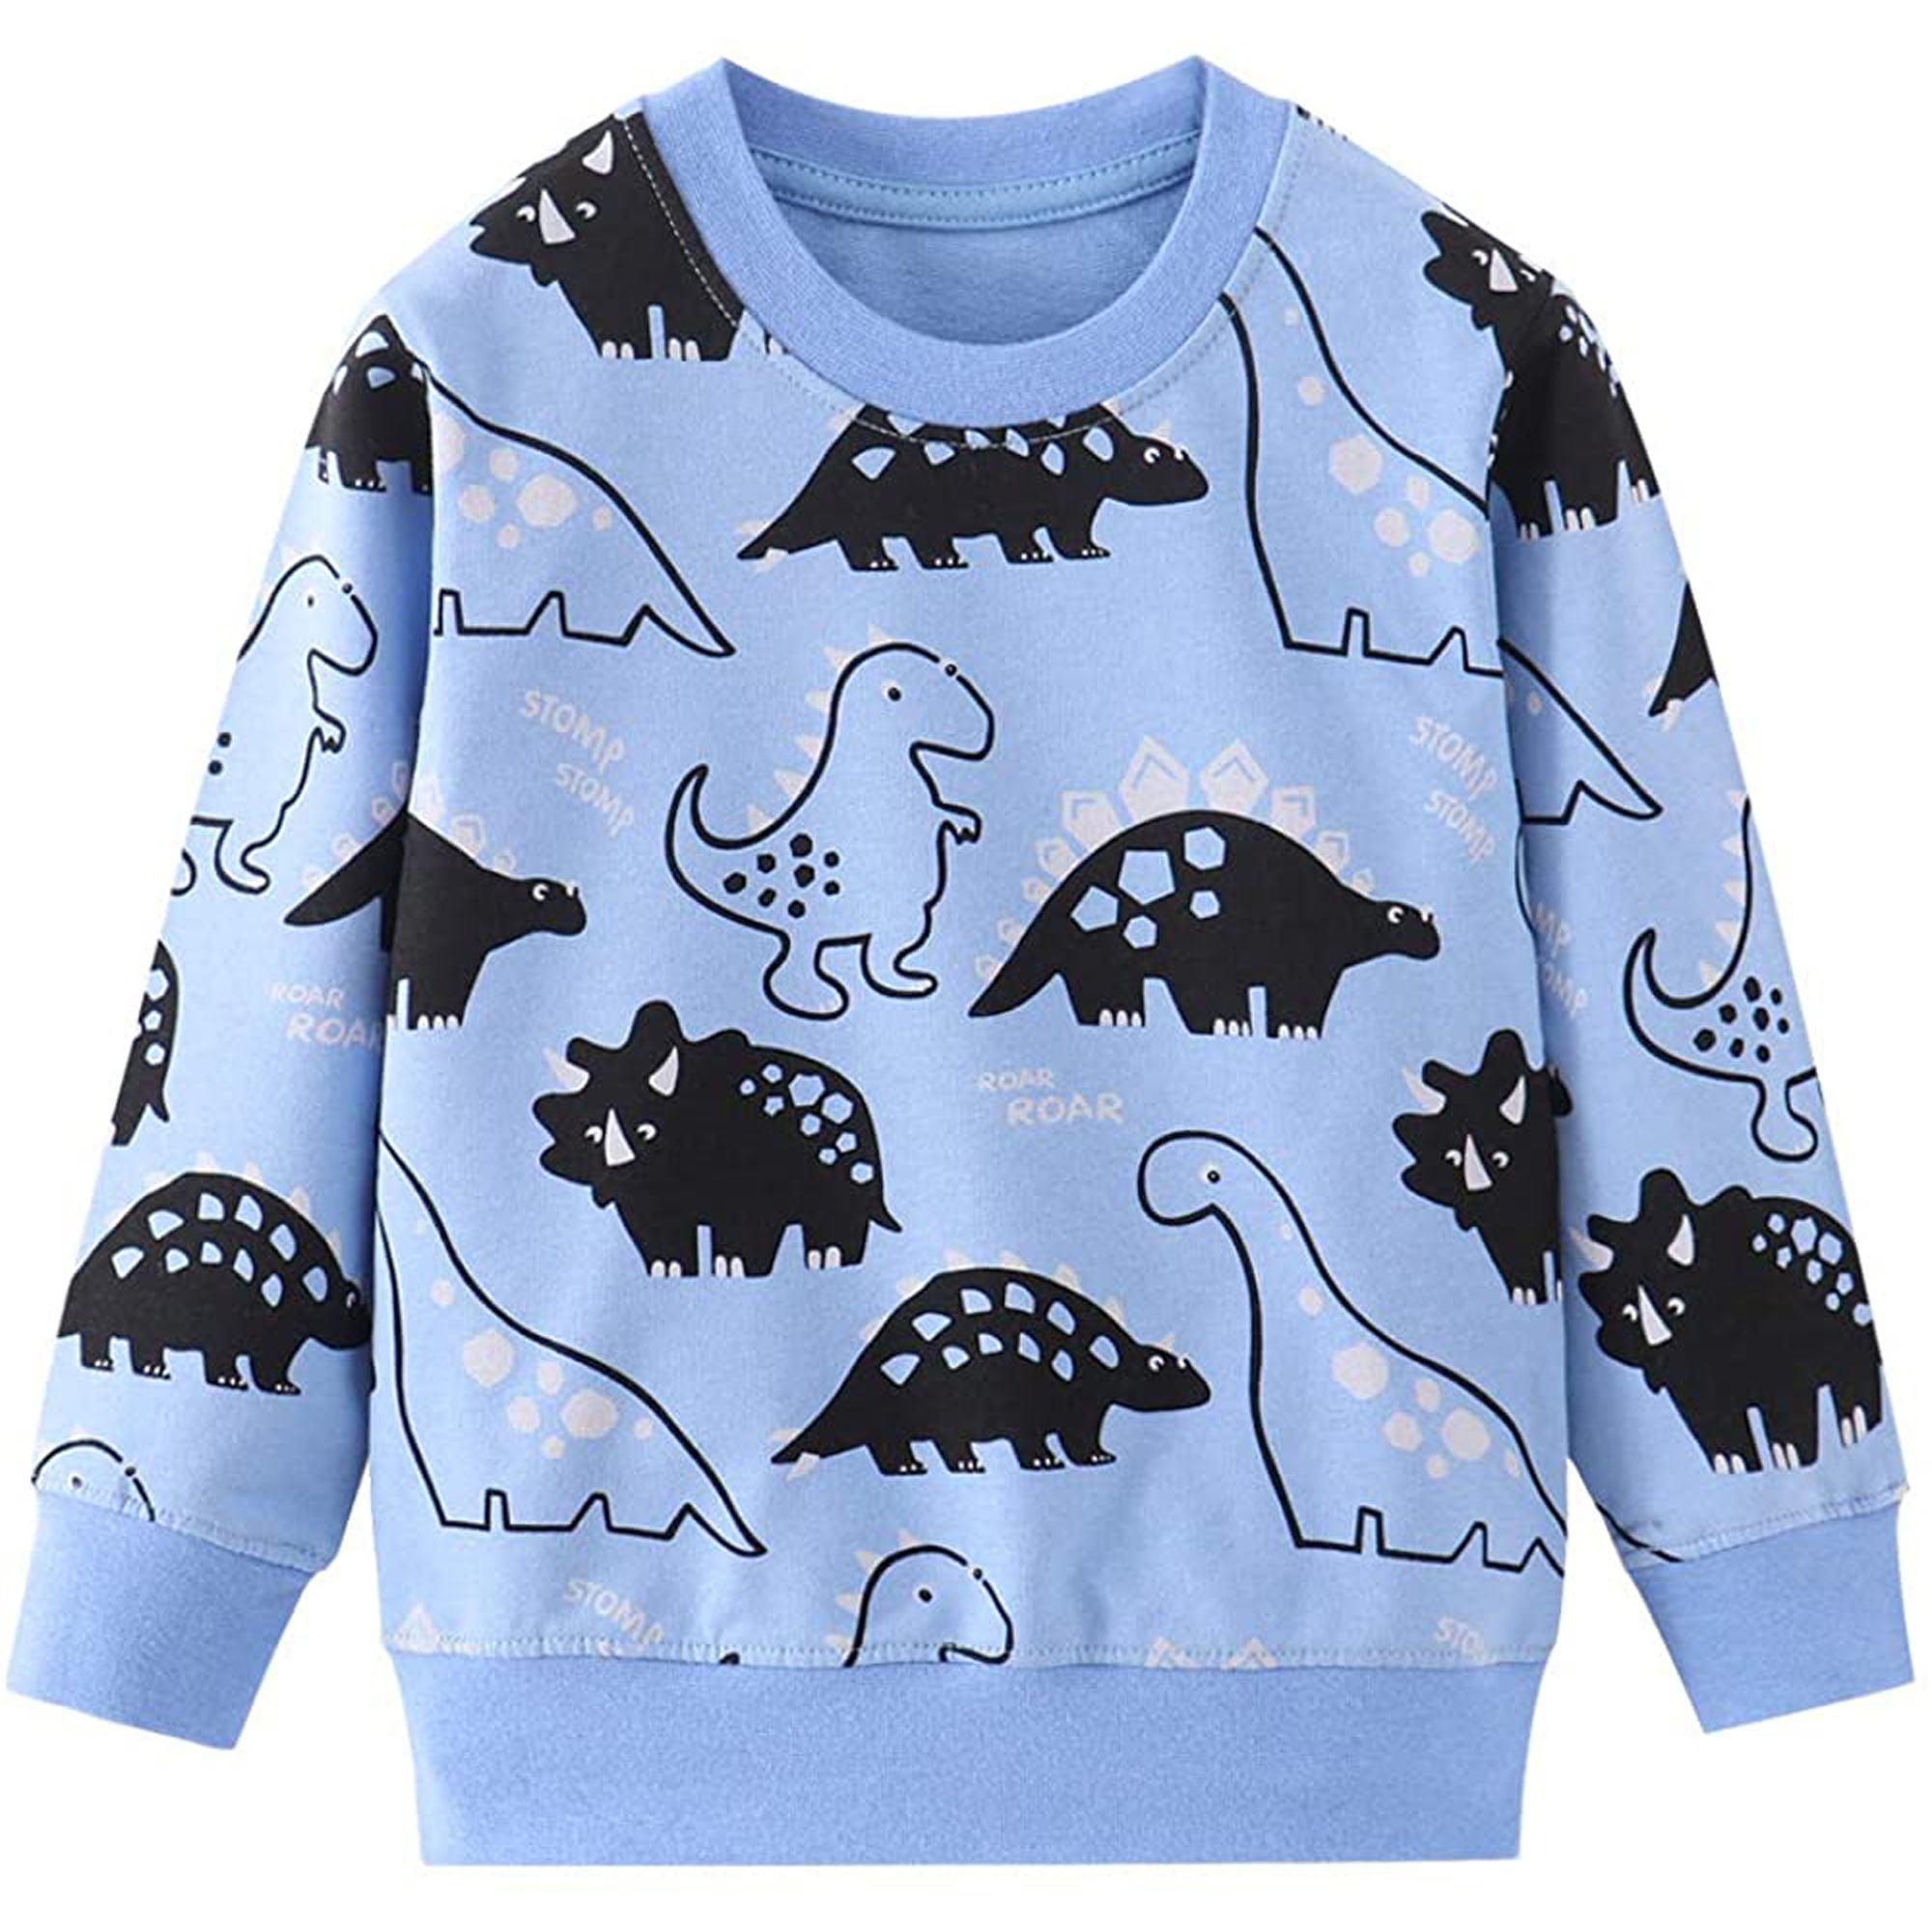 Ovovod Dinosaur Sweatshirts Boys Long Sleeve Hoodies Casual Pullover Tops for 3-14 Years Kids 